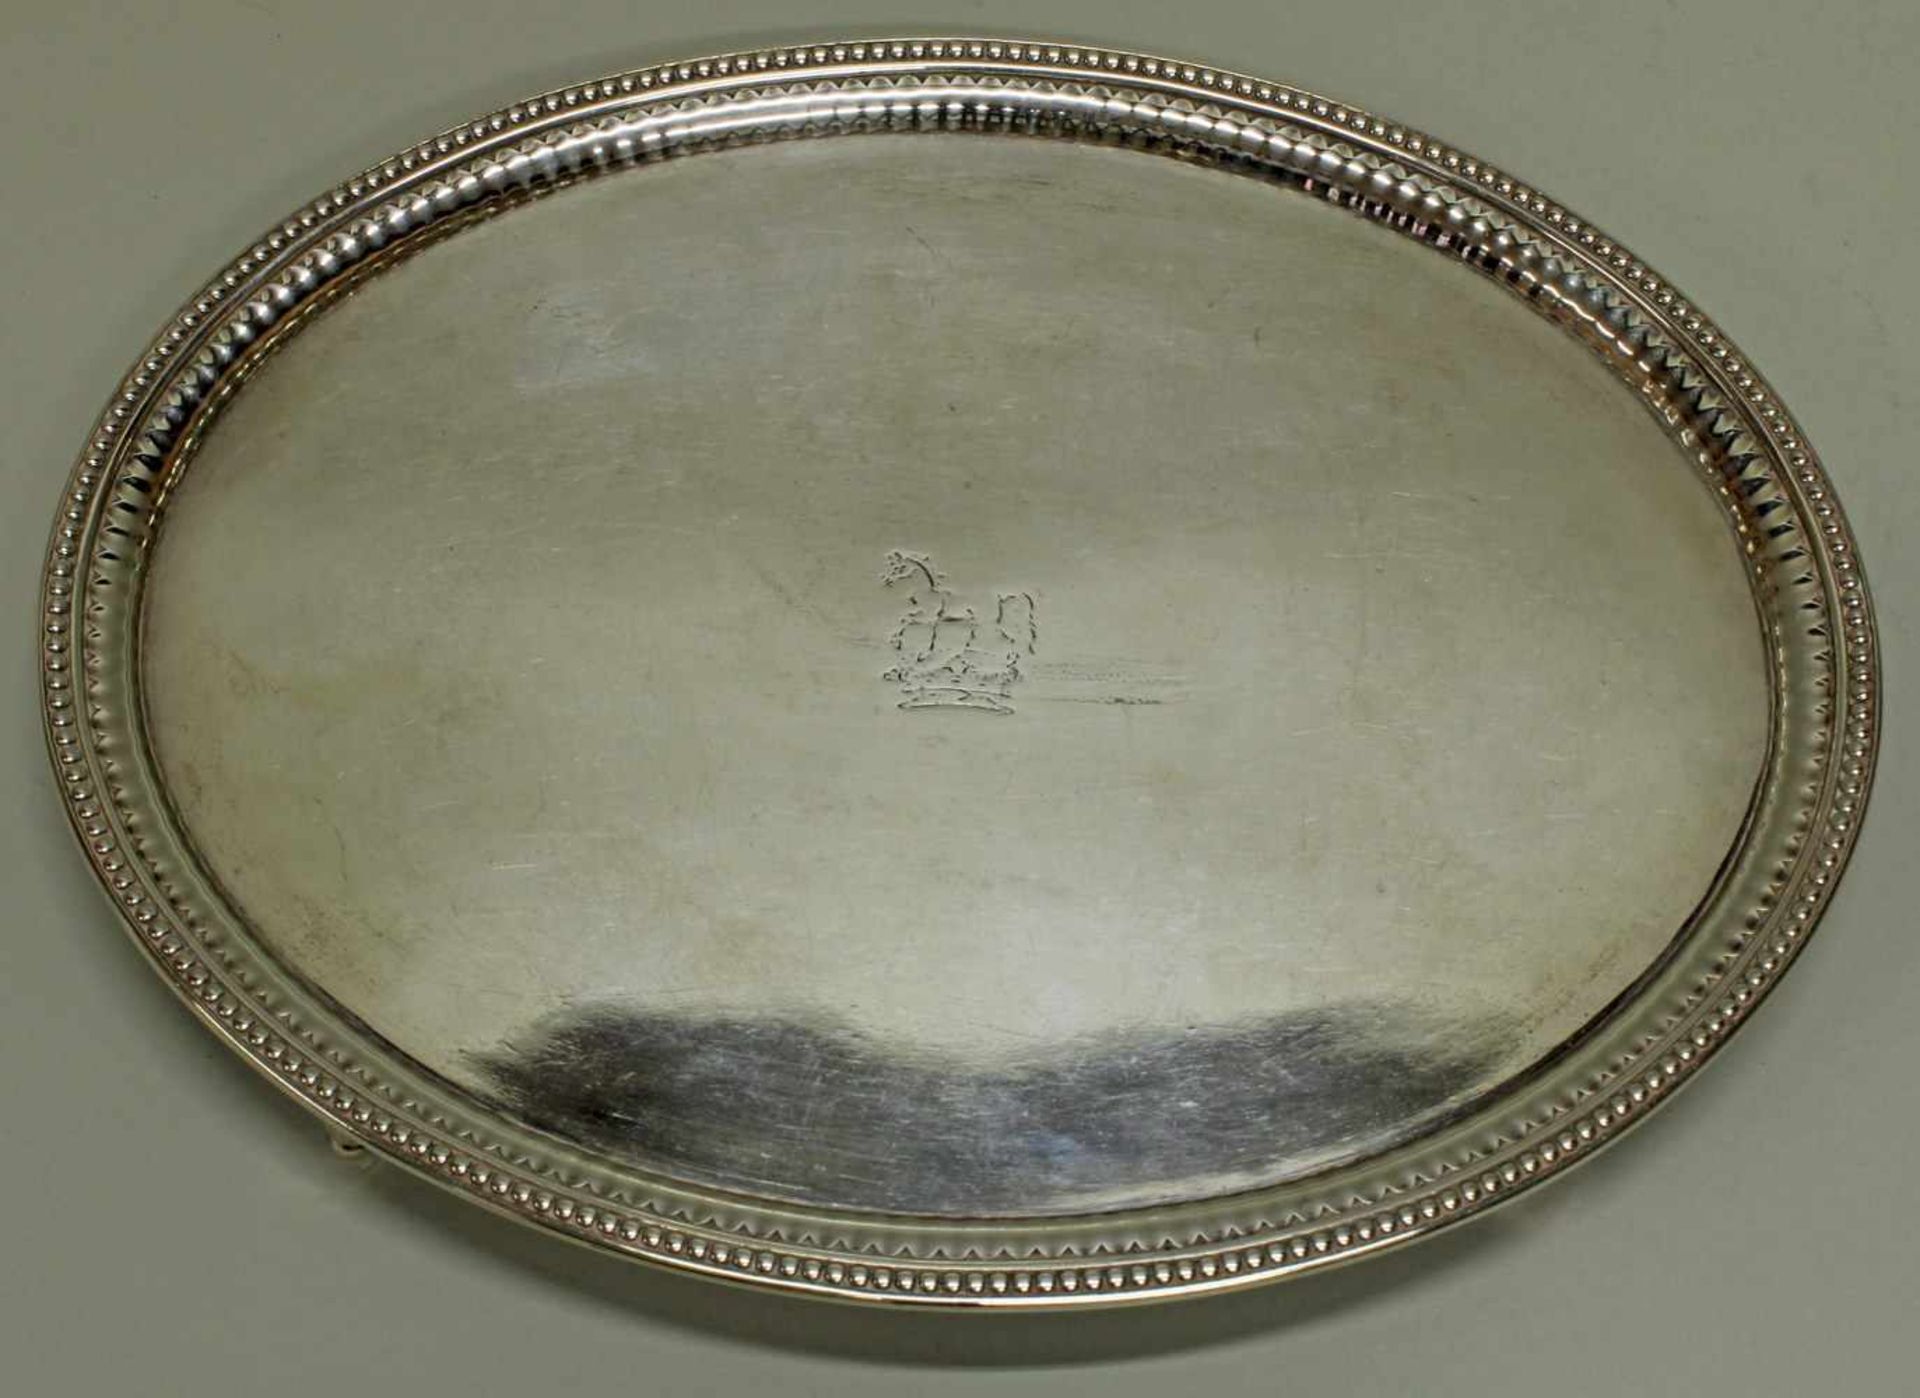 Salver, Silber 925, London, 1783, John Wakelin & William Taylor, oval, glatter Spiegel mit Emblem, - Image 4 of 6